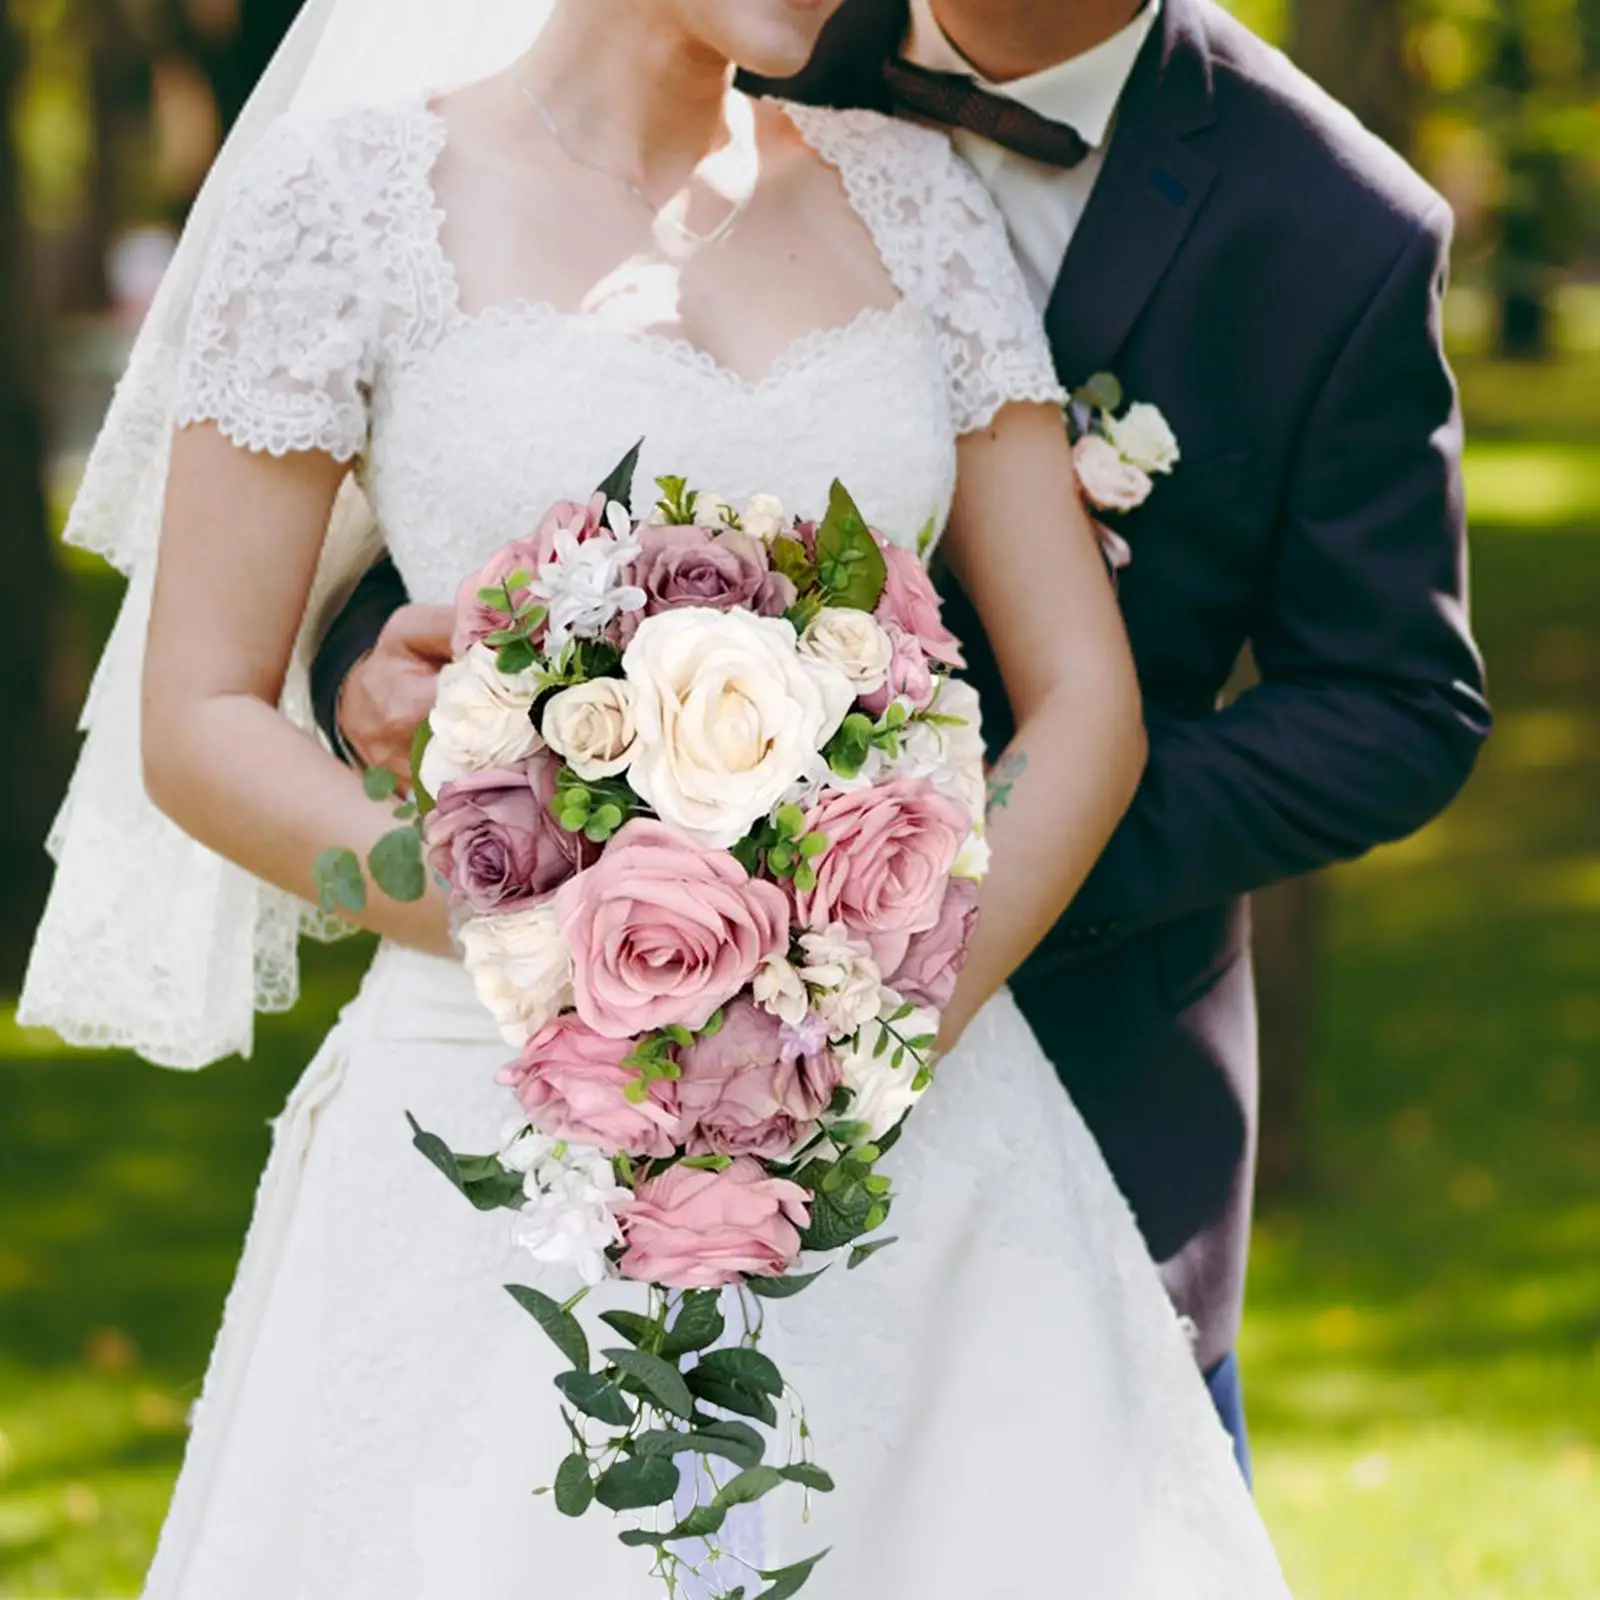 Artificial Bouquet Backdrop Decorative Romantic Multipurpose for Engagement Photographic Props Anniversary Valentine`S Day Bride